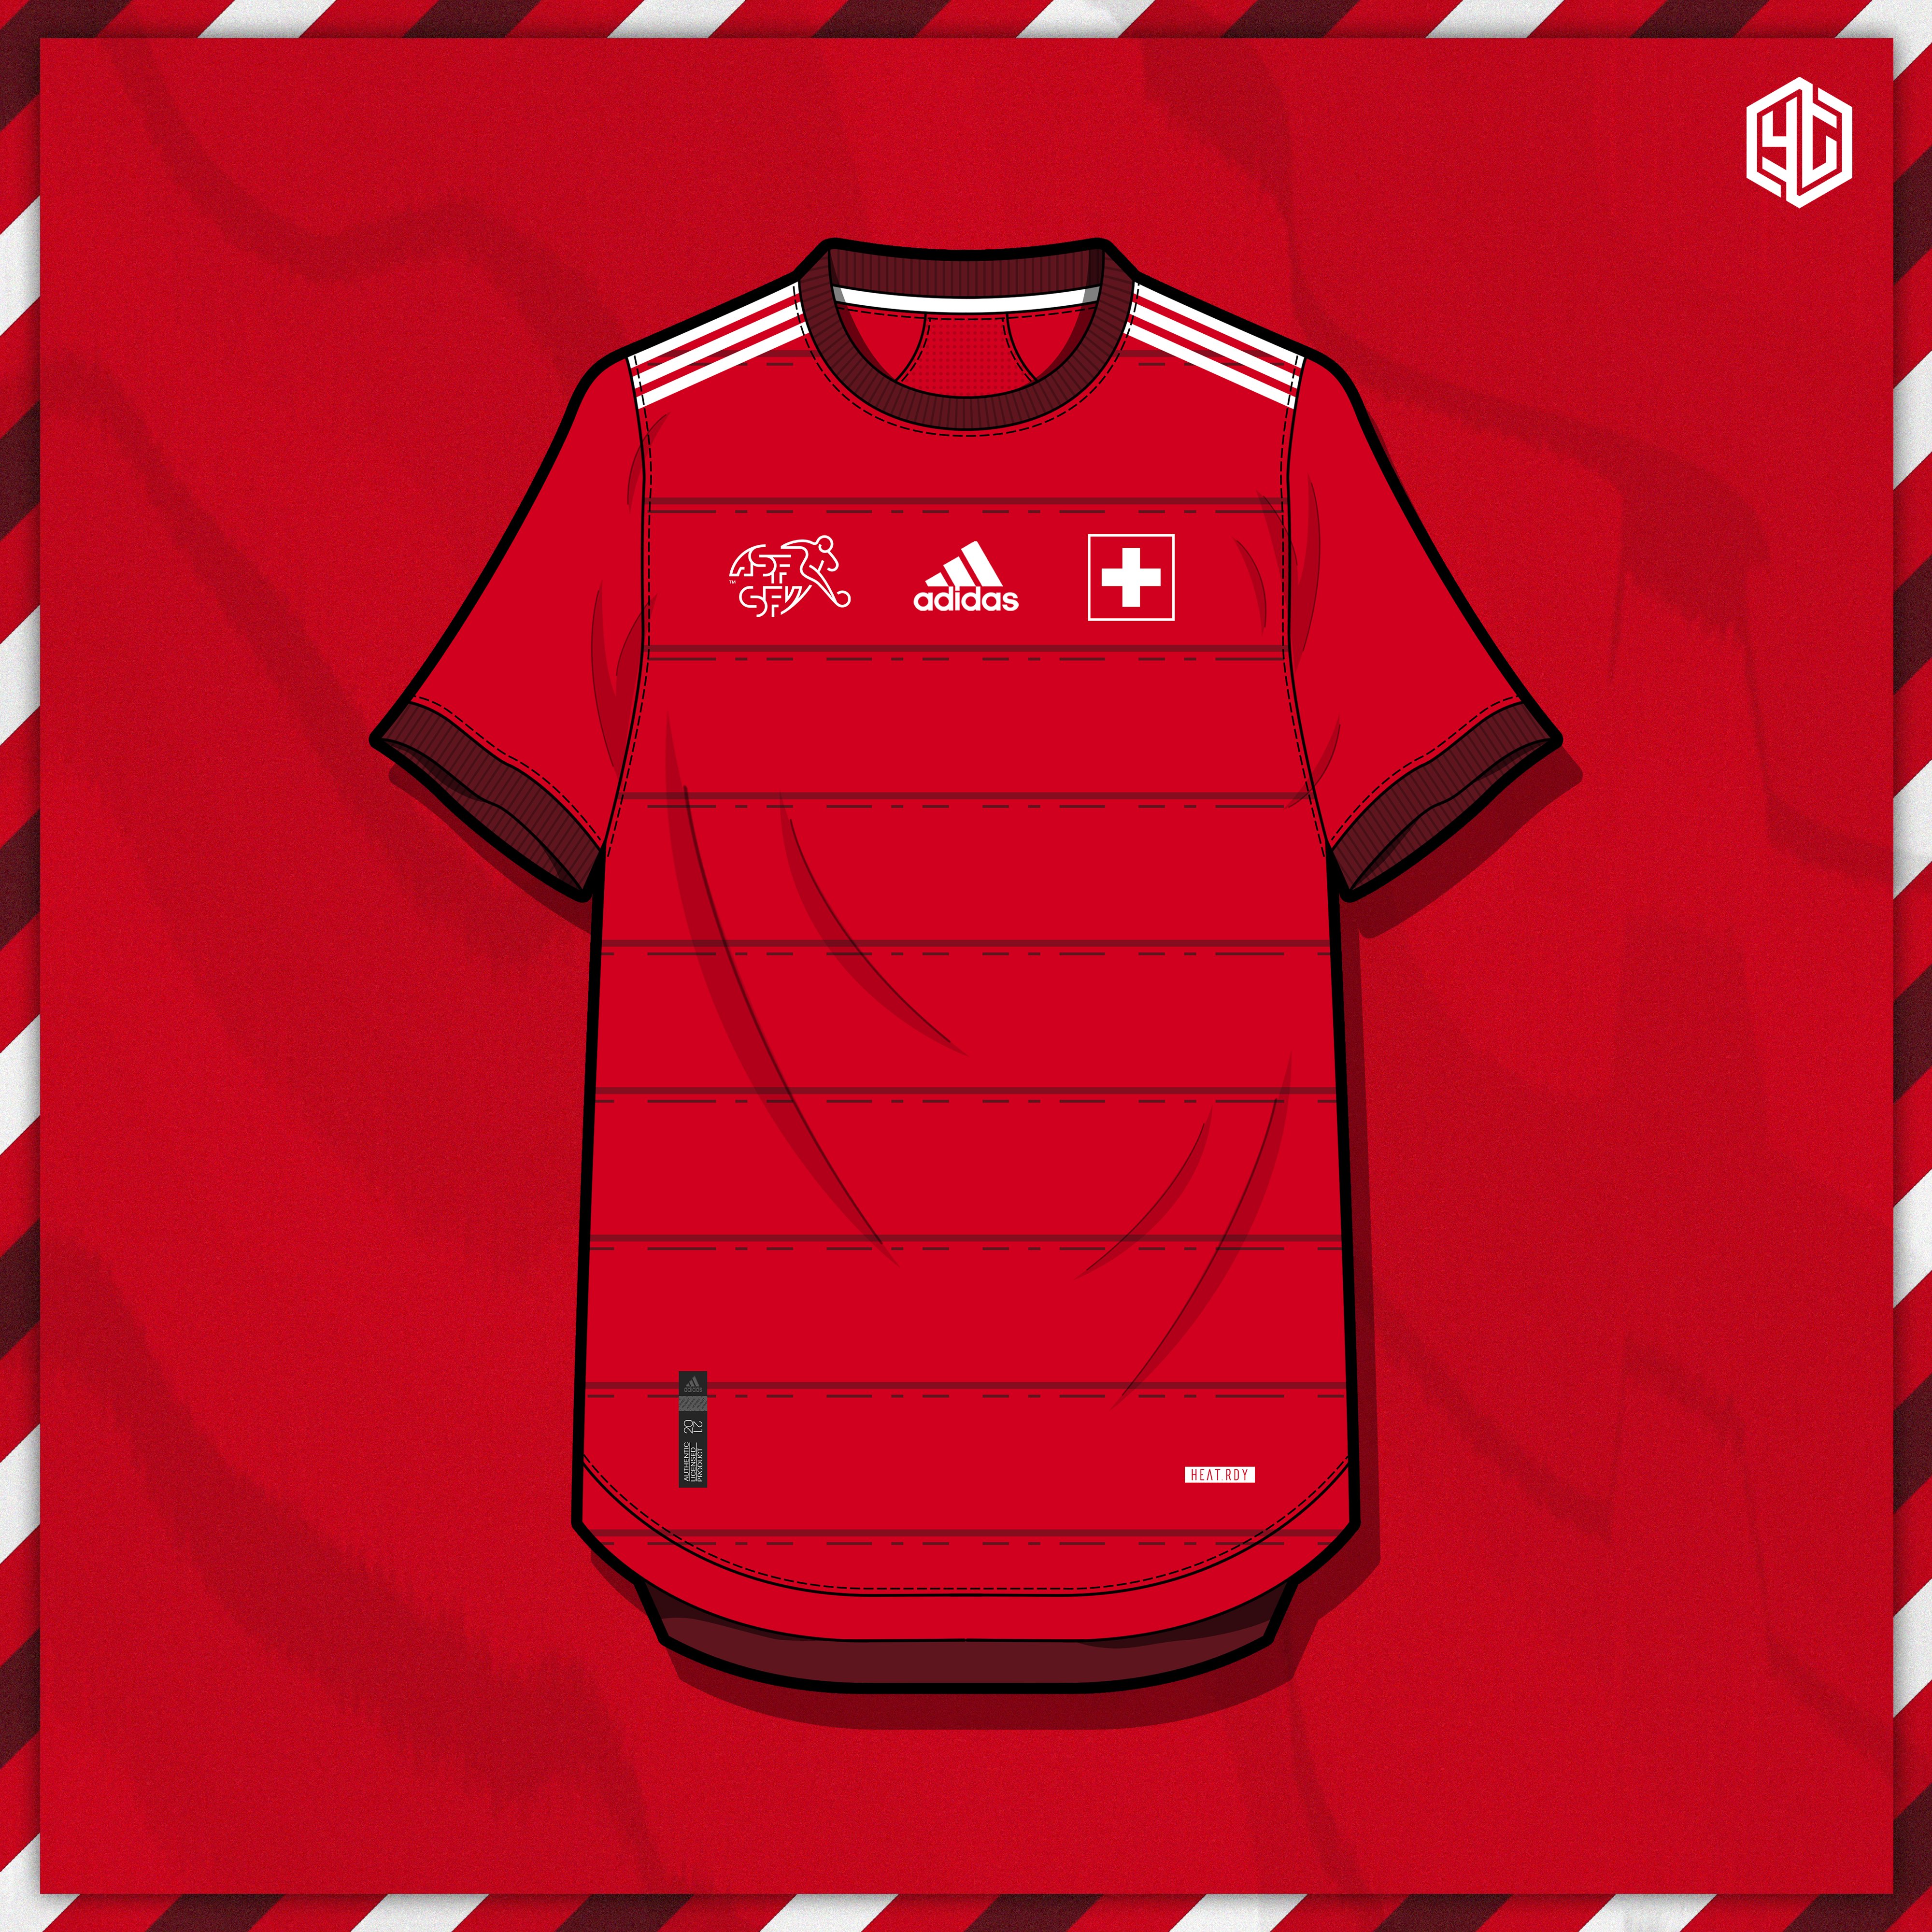 YGraphics on Twitter: "• Switzerland x Adidas • home jersey concept •  #JuevesF4ntasy #Pretemporada #Temporada4 https://t.co/bjEKV7mwI6" / Twitter